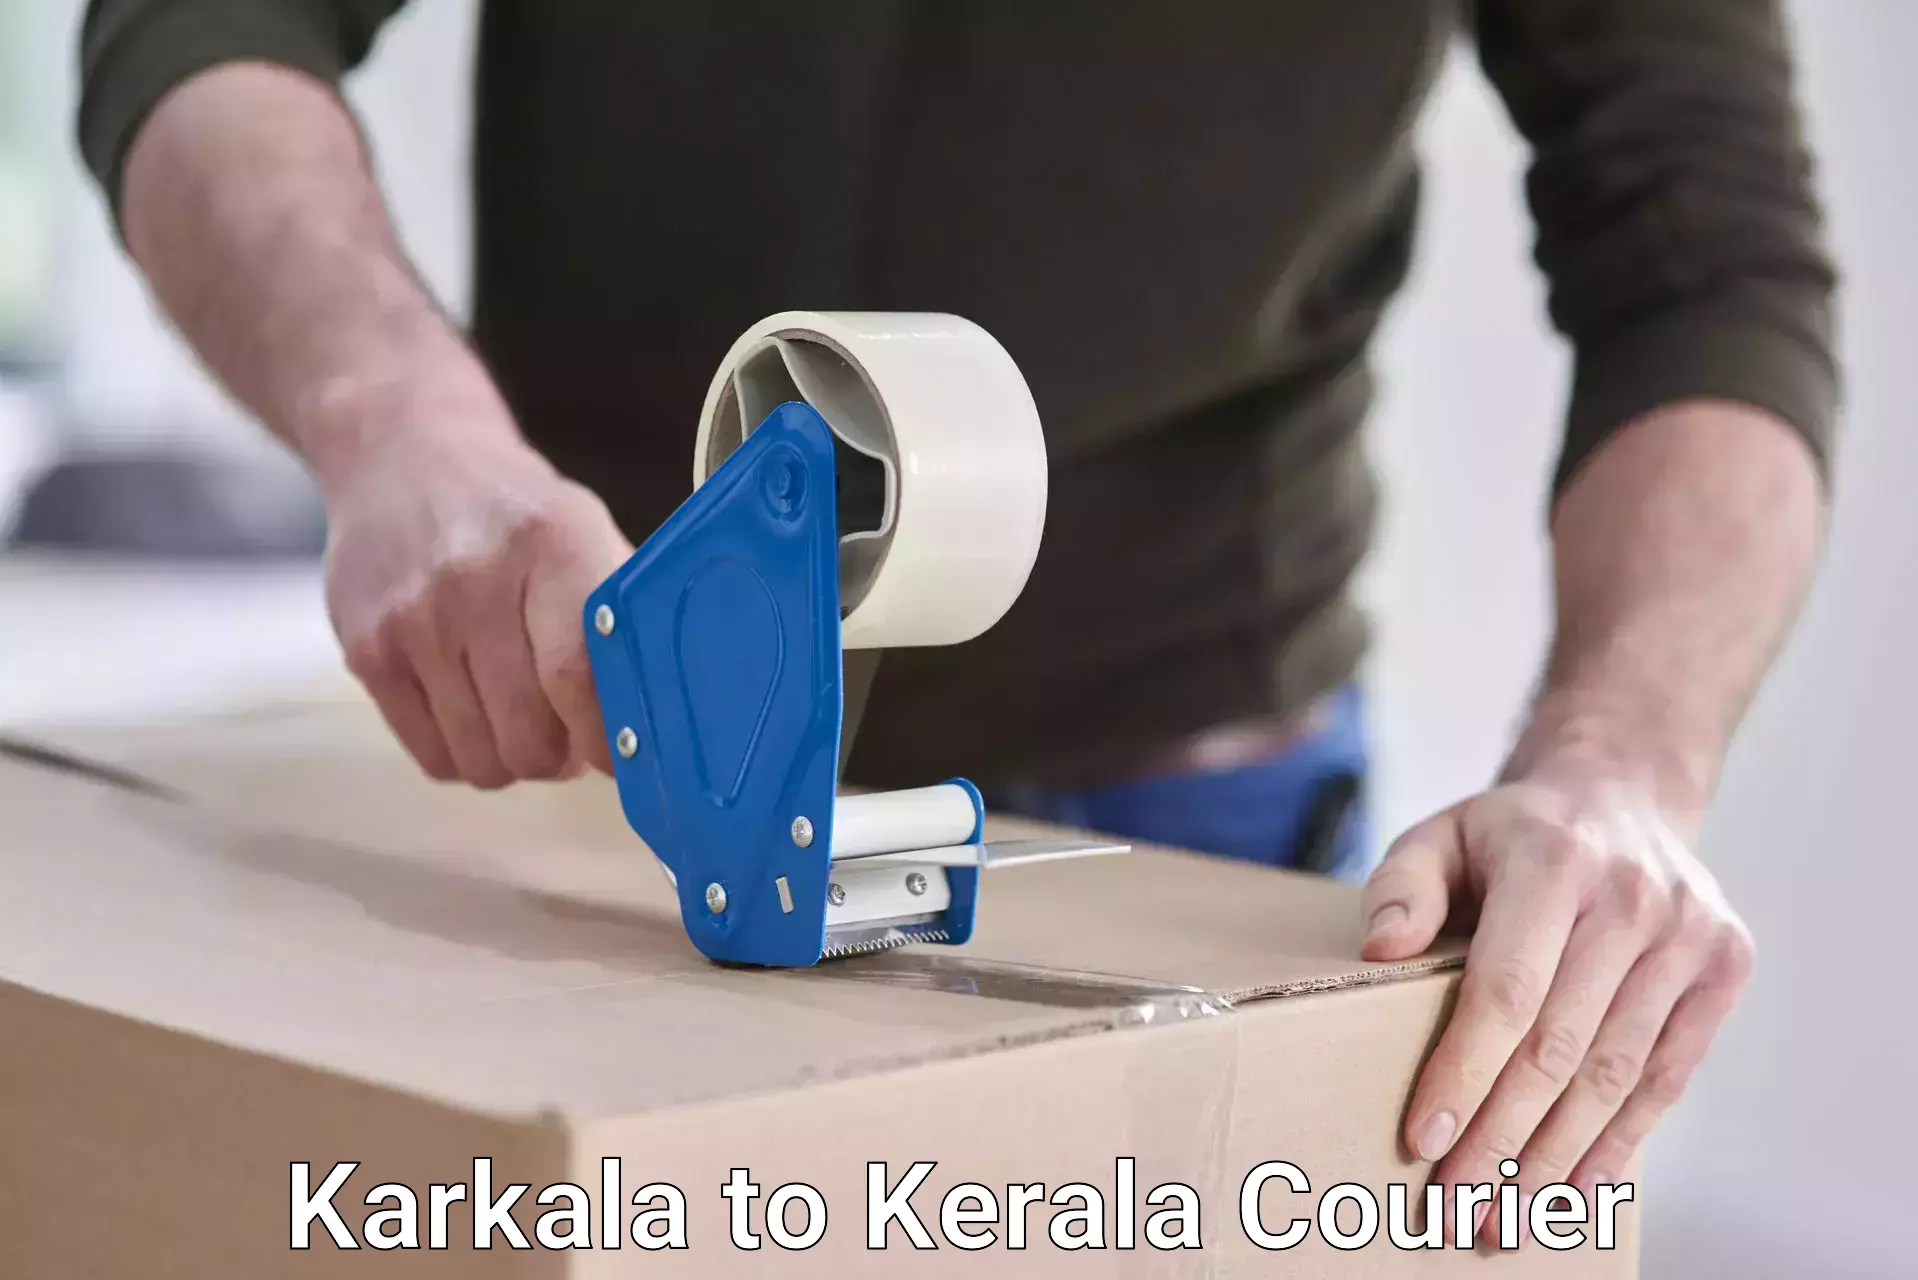 Courier service comparison Karkala to Kerala